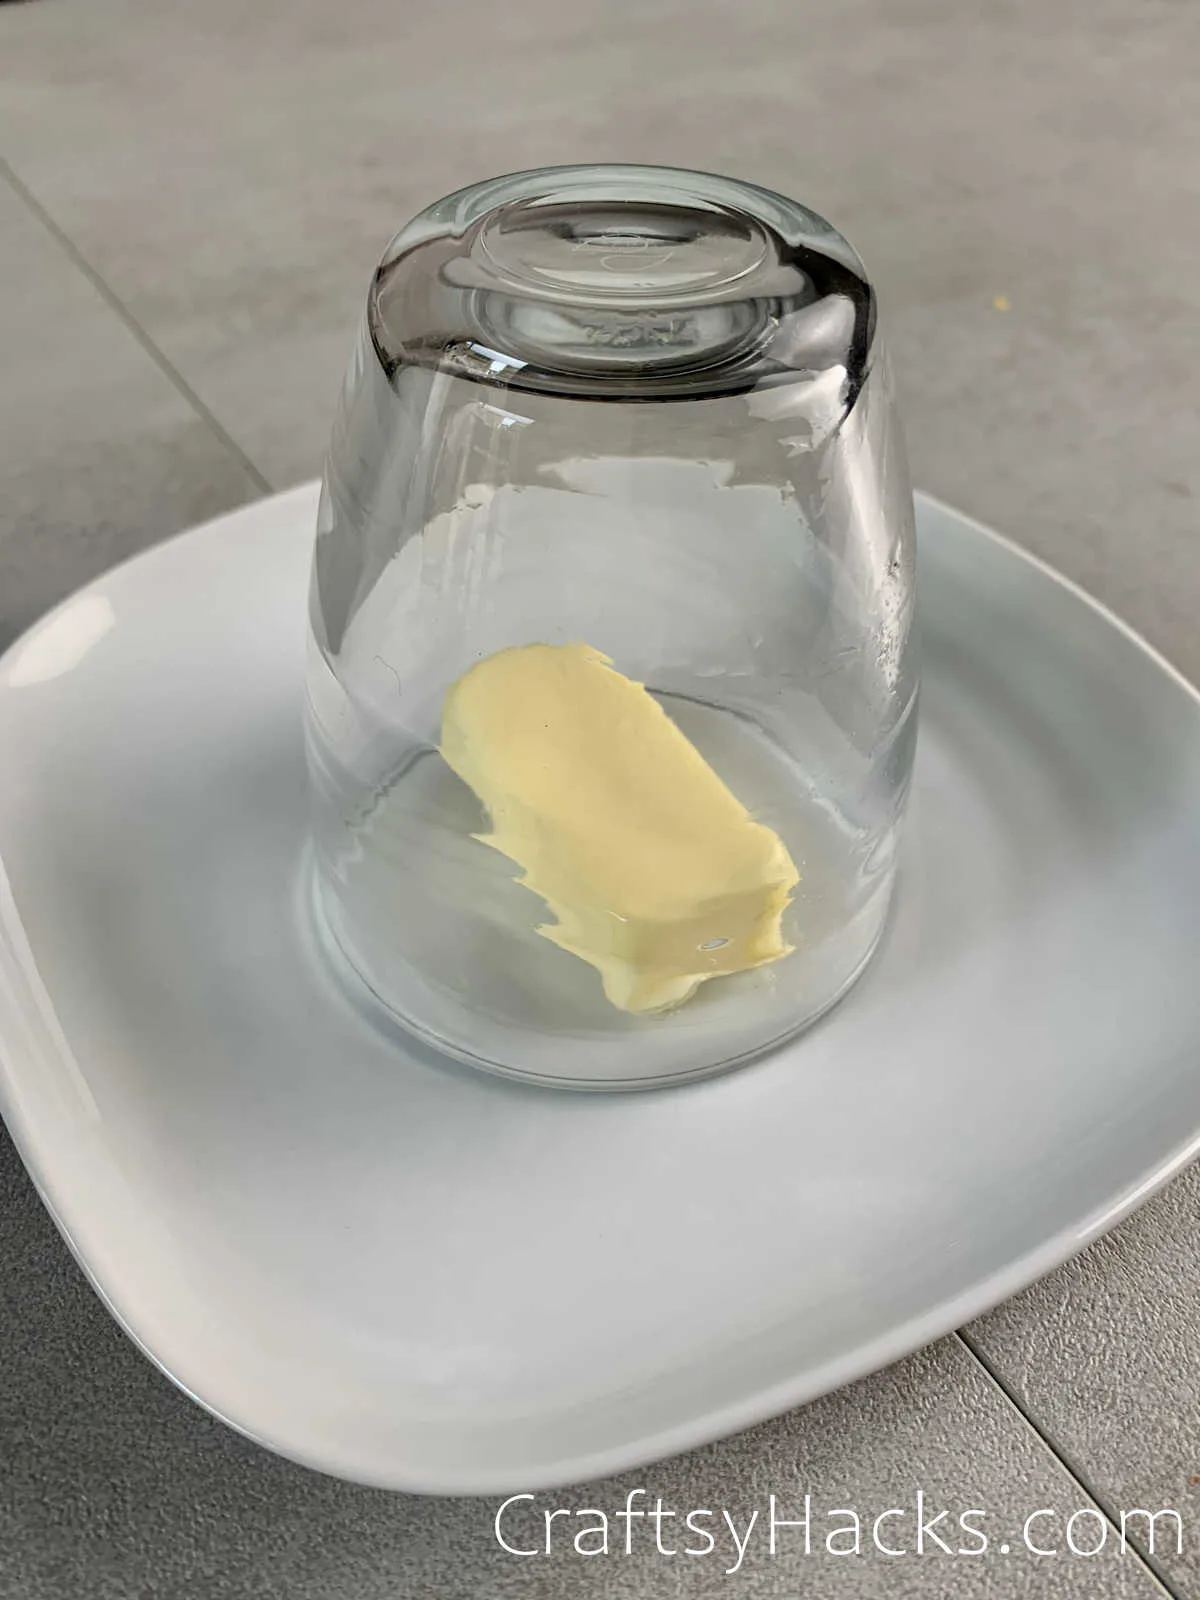 soften butter hack